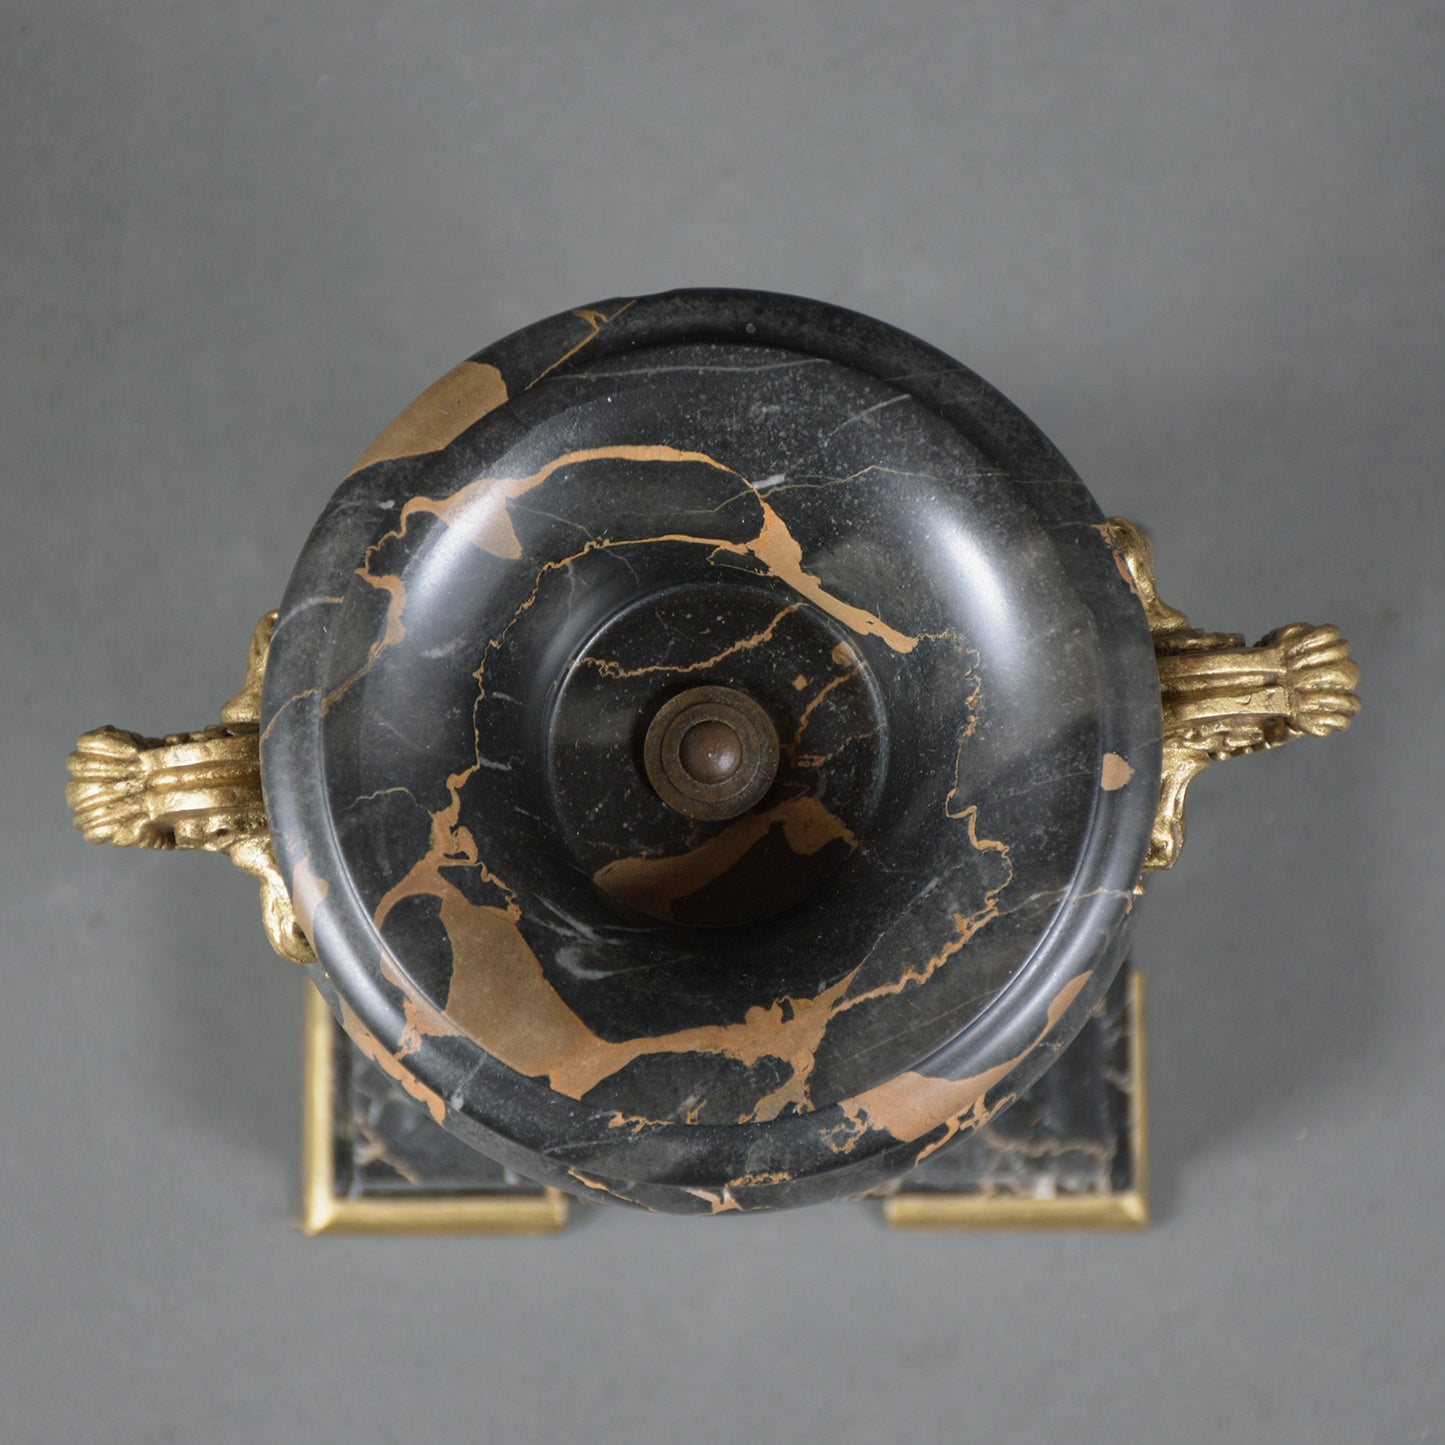 Pair of 19th Century Empire Marble Urns